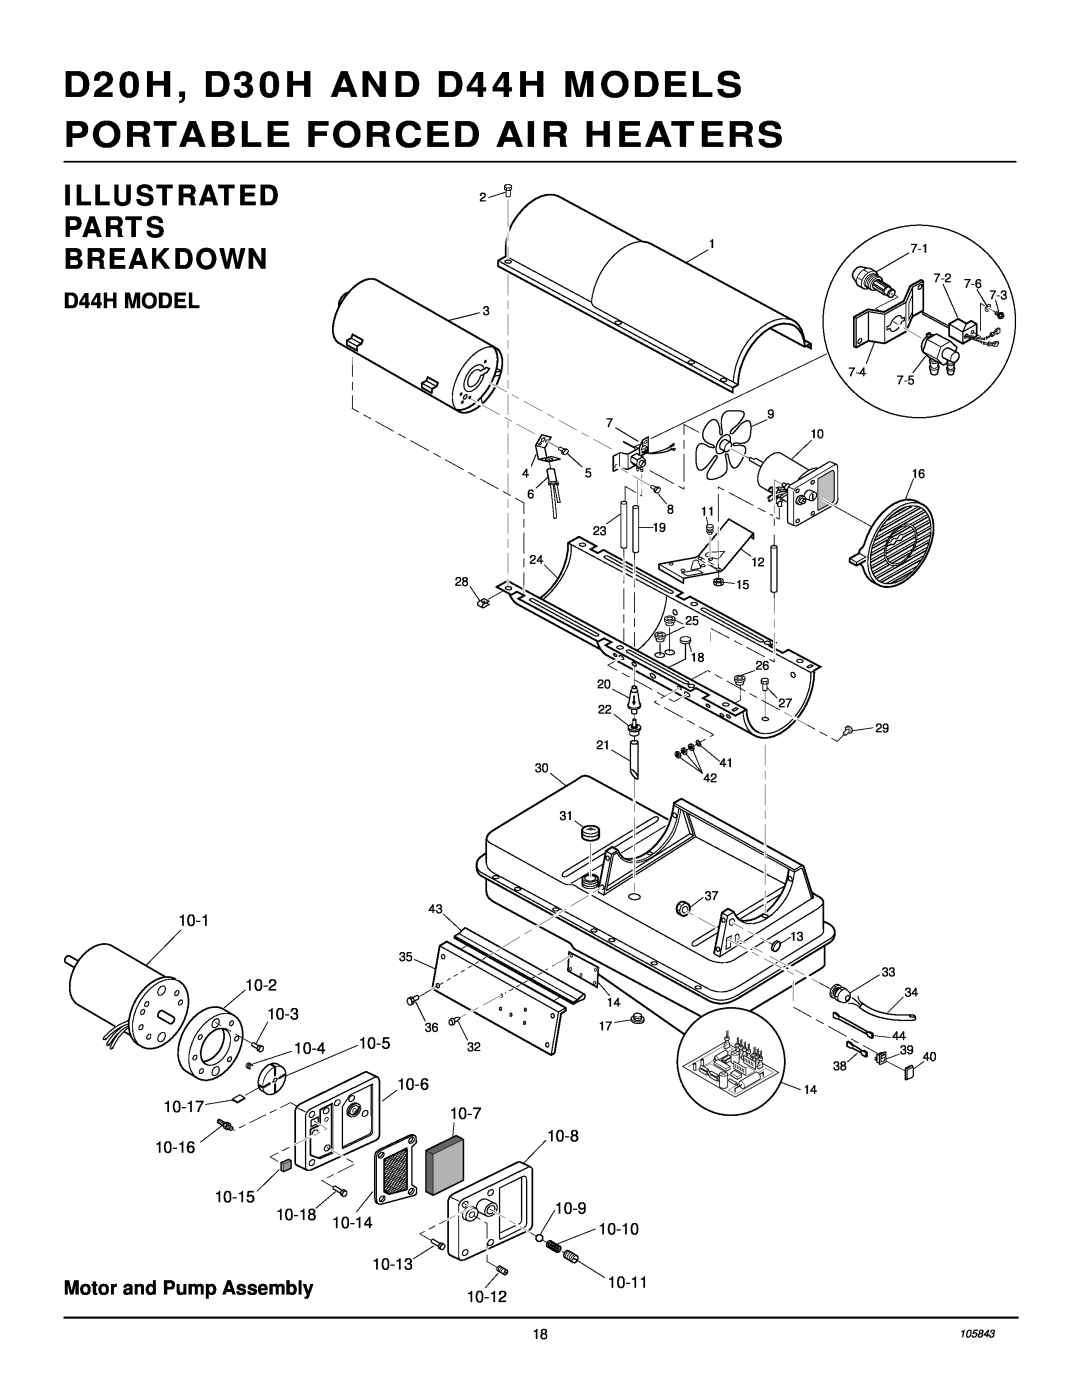 Desa D30H, D20H owner manual D44H MODEL, Illustrated Parts Breakdown 